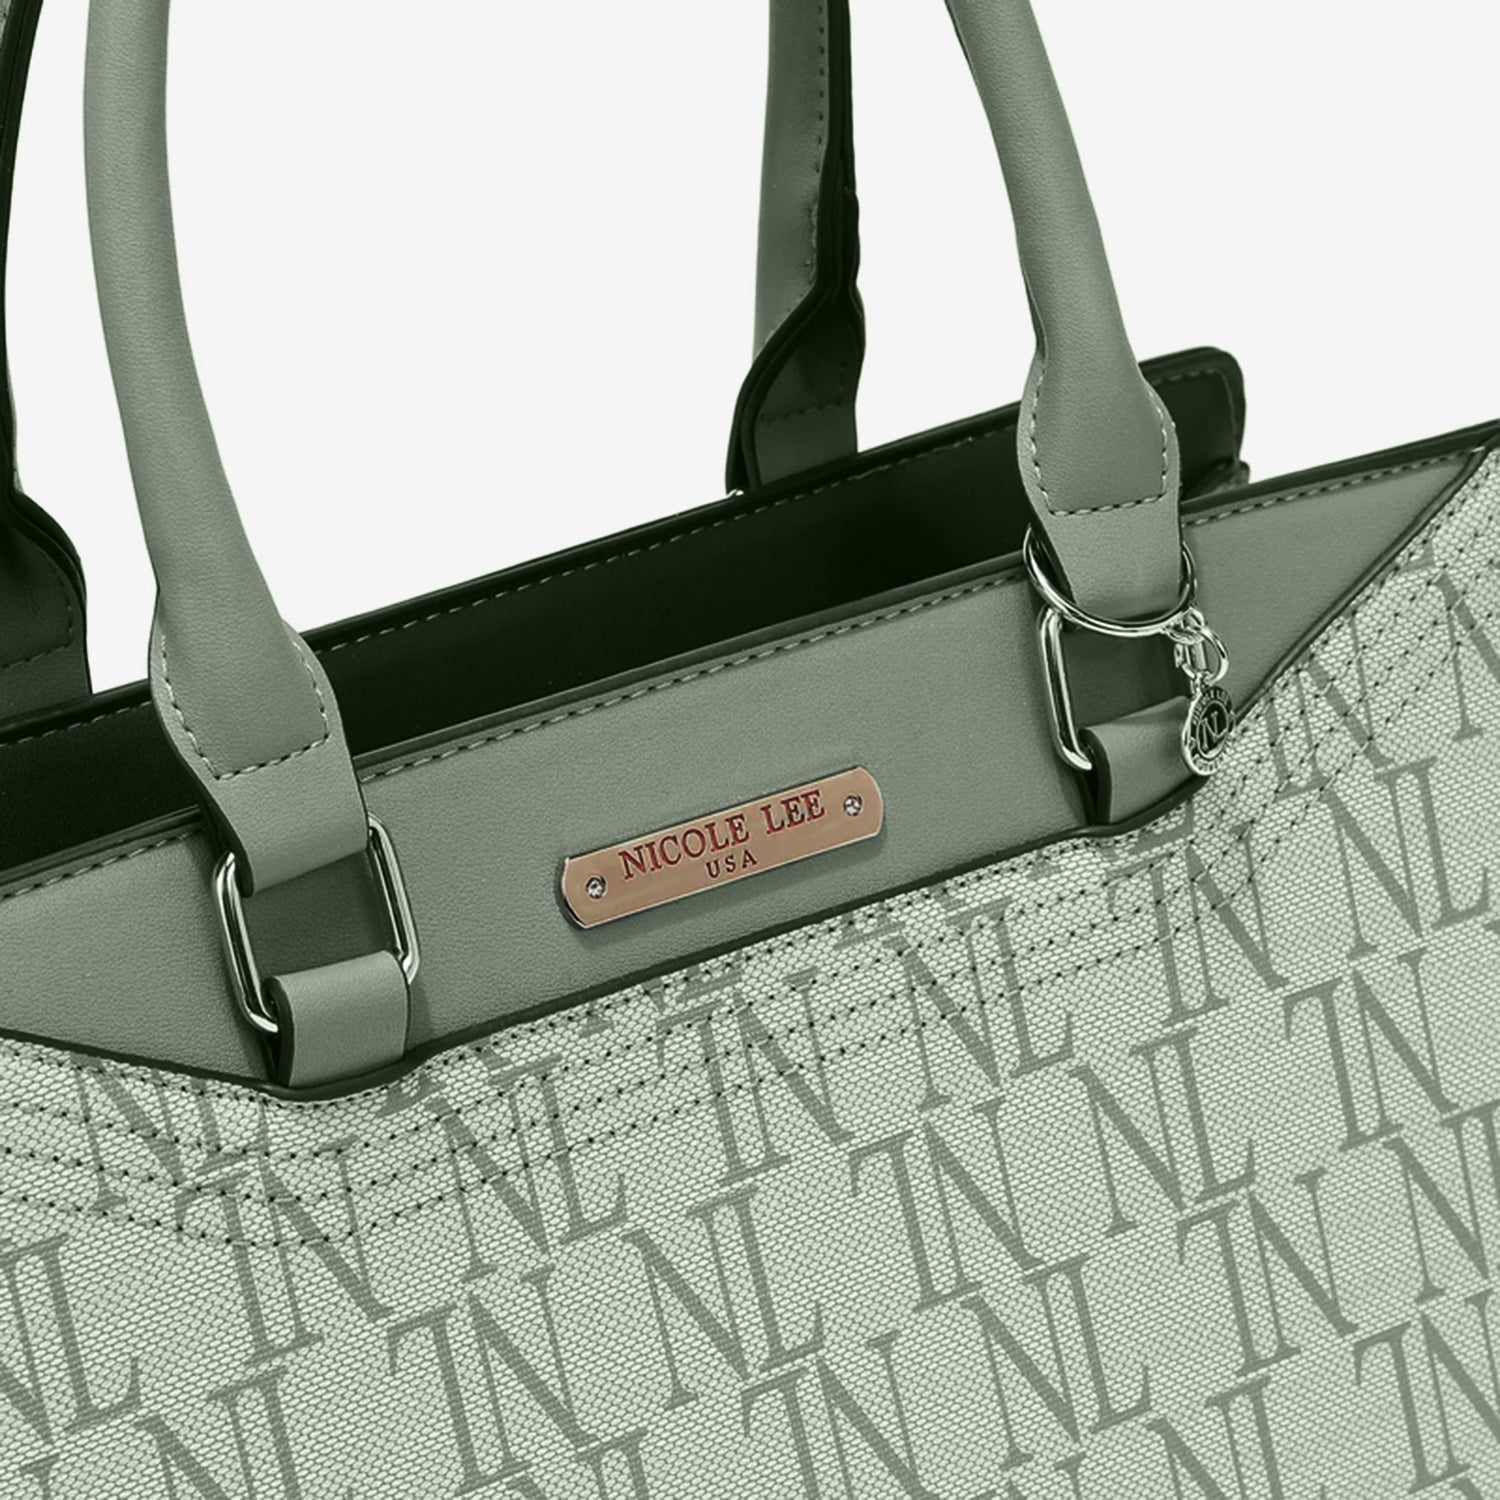 Nicole Lee USA 3-Piece Letter Print Texture Handbag Set apparel & accessories